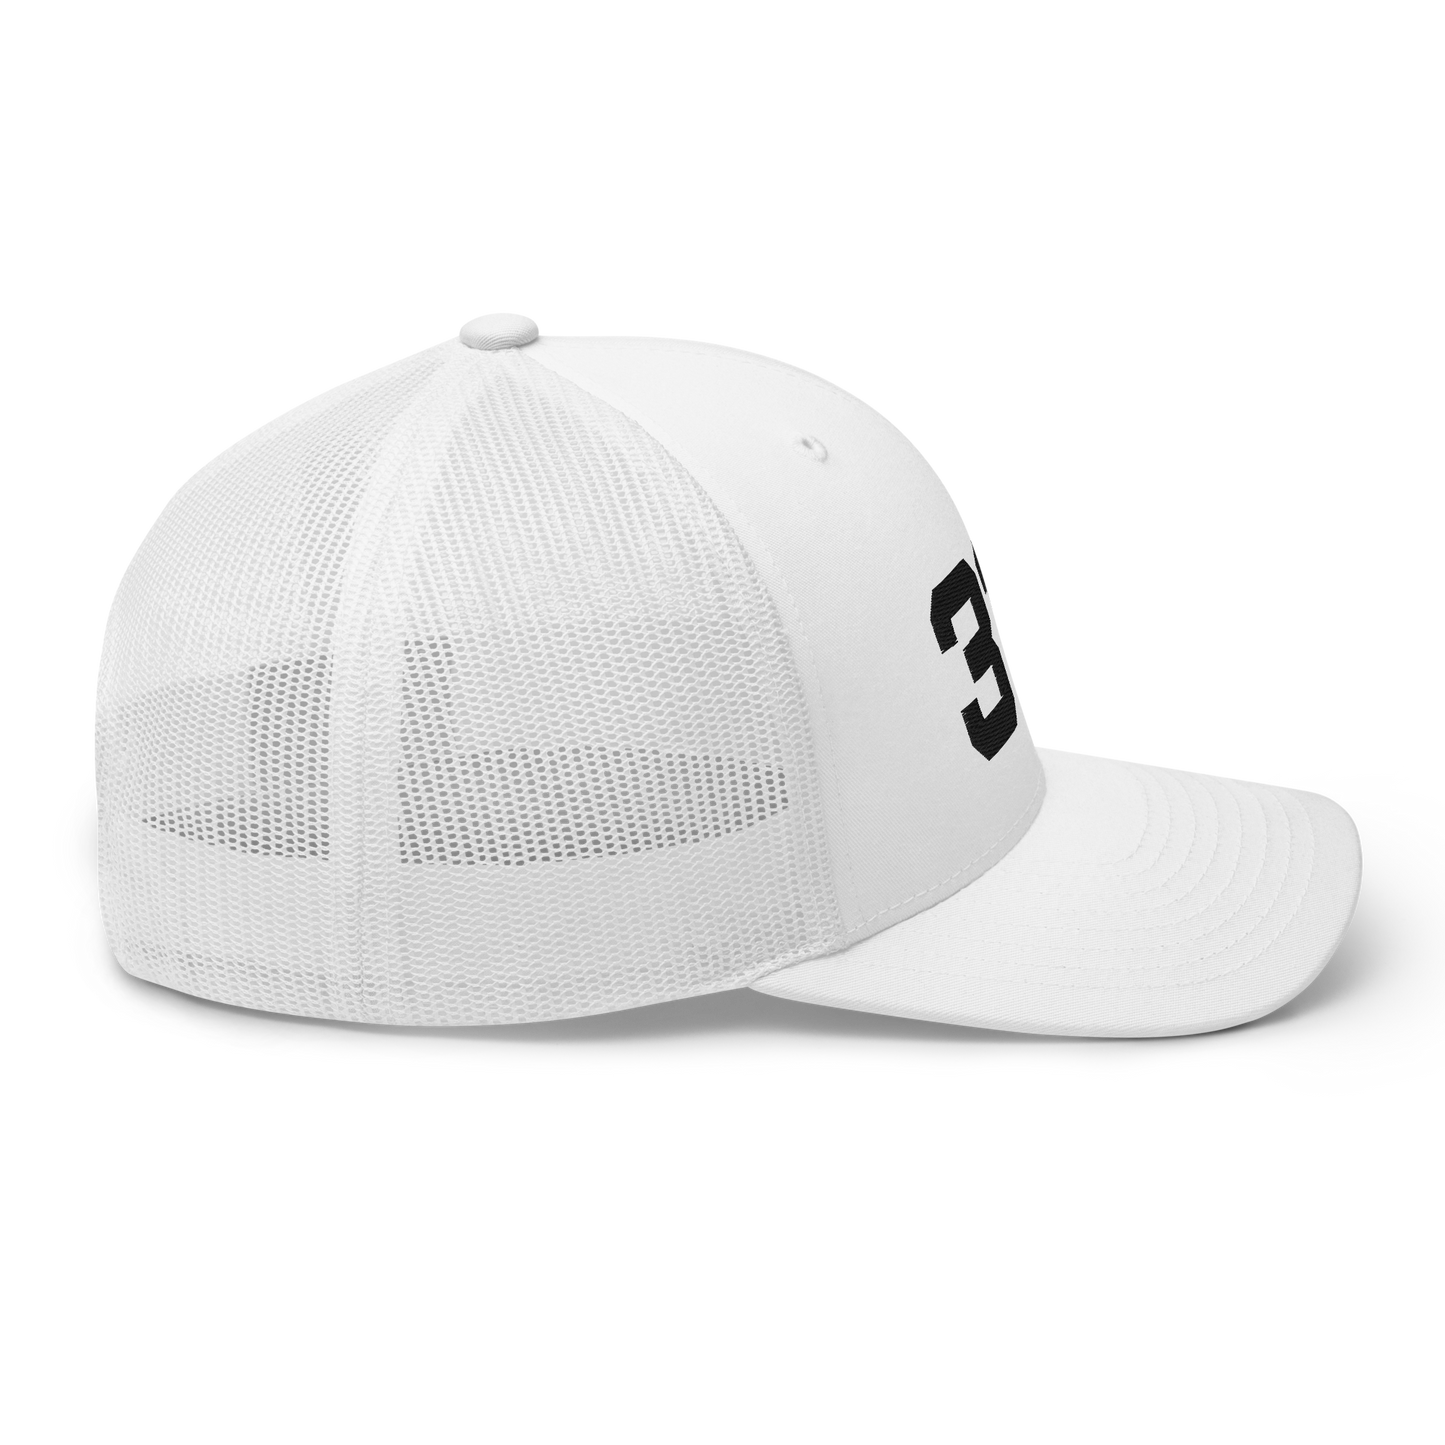 Detroit '313' Trucker Hat | White/Black Embroidery